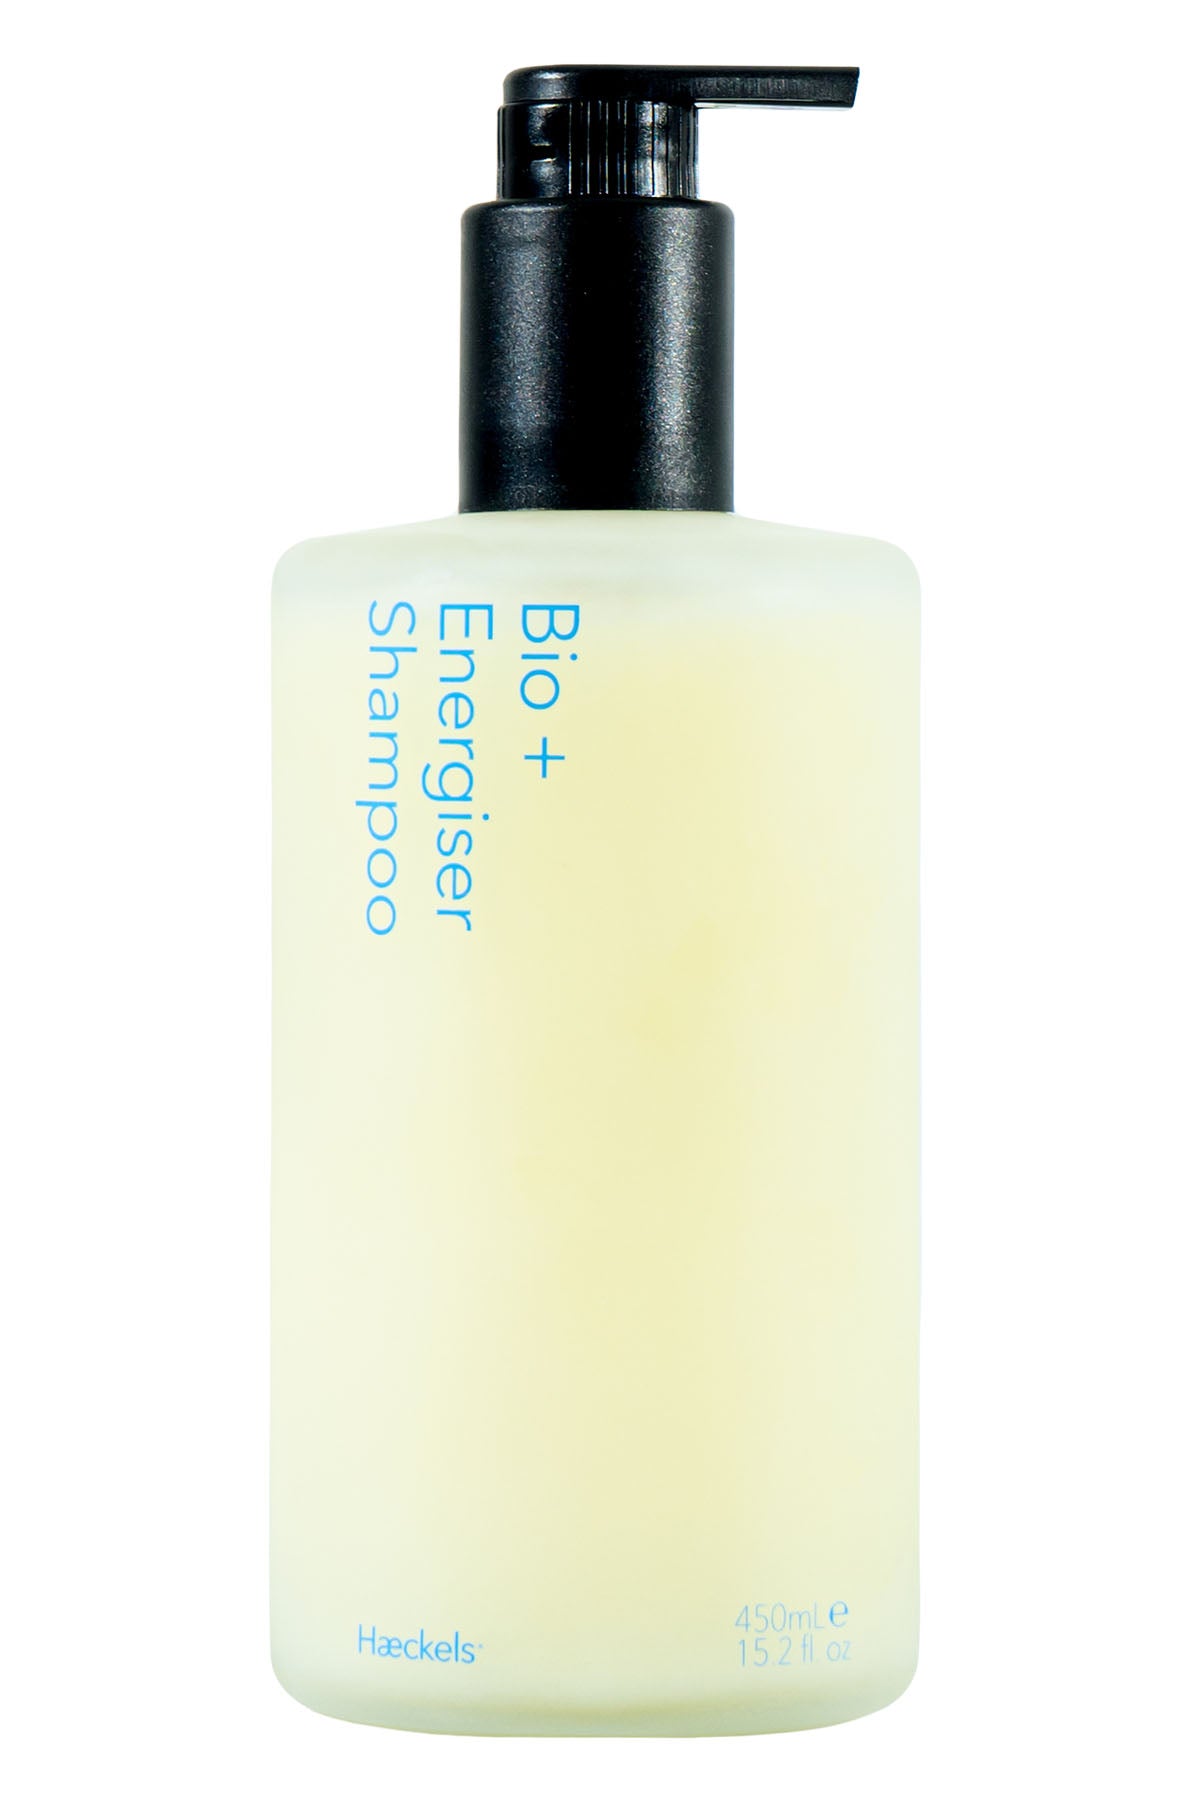 Haeckels Bio + Energiser Shampoo 450 ML